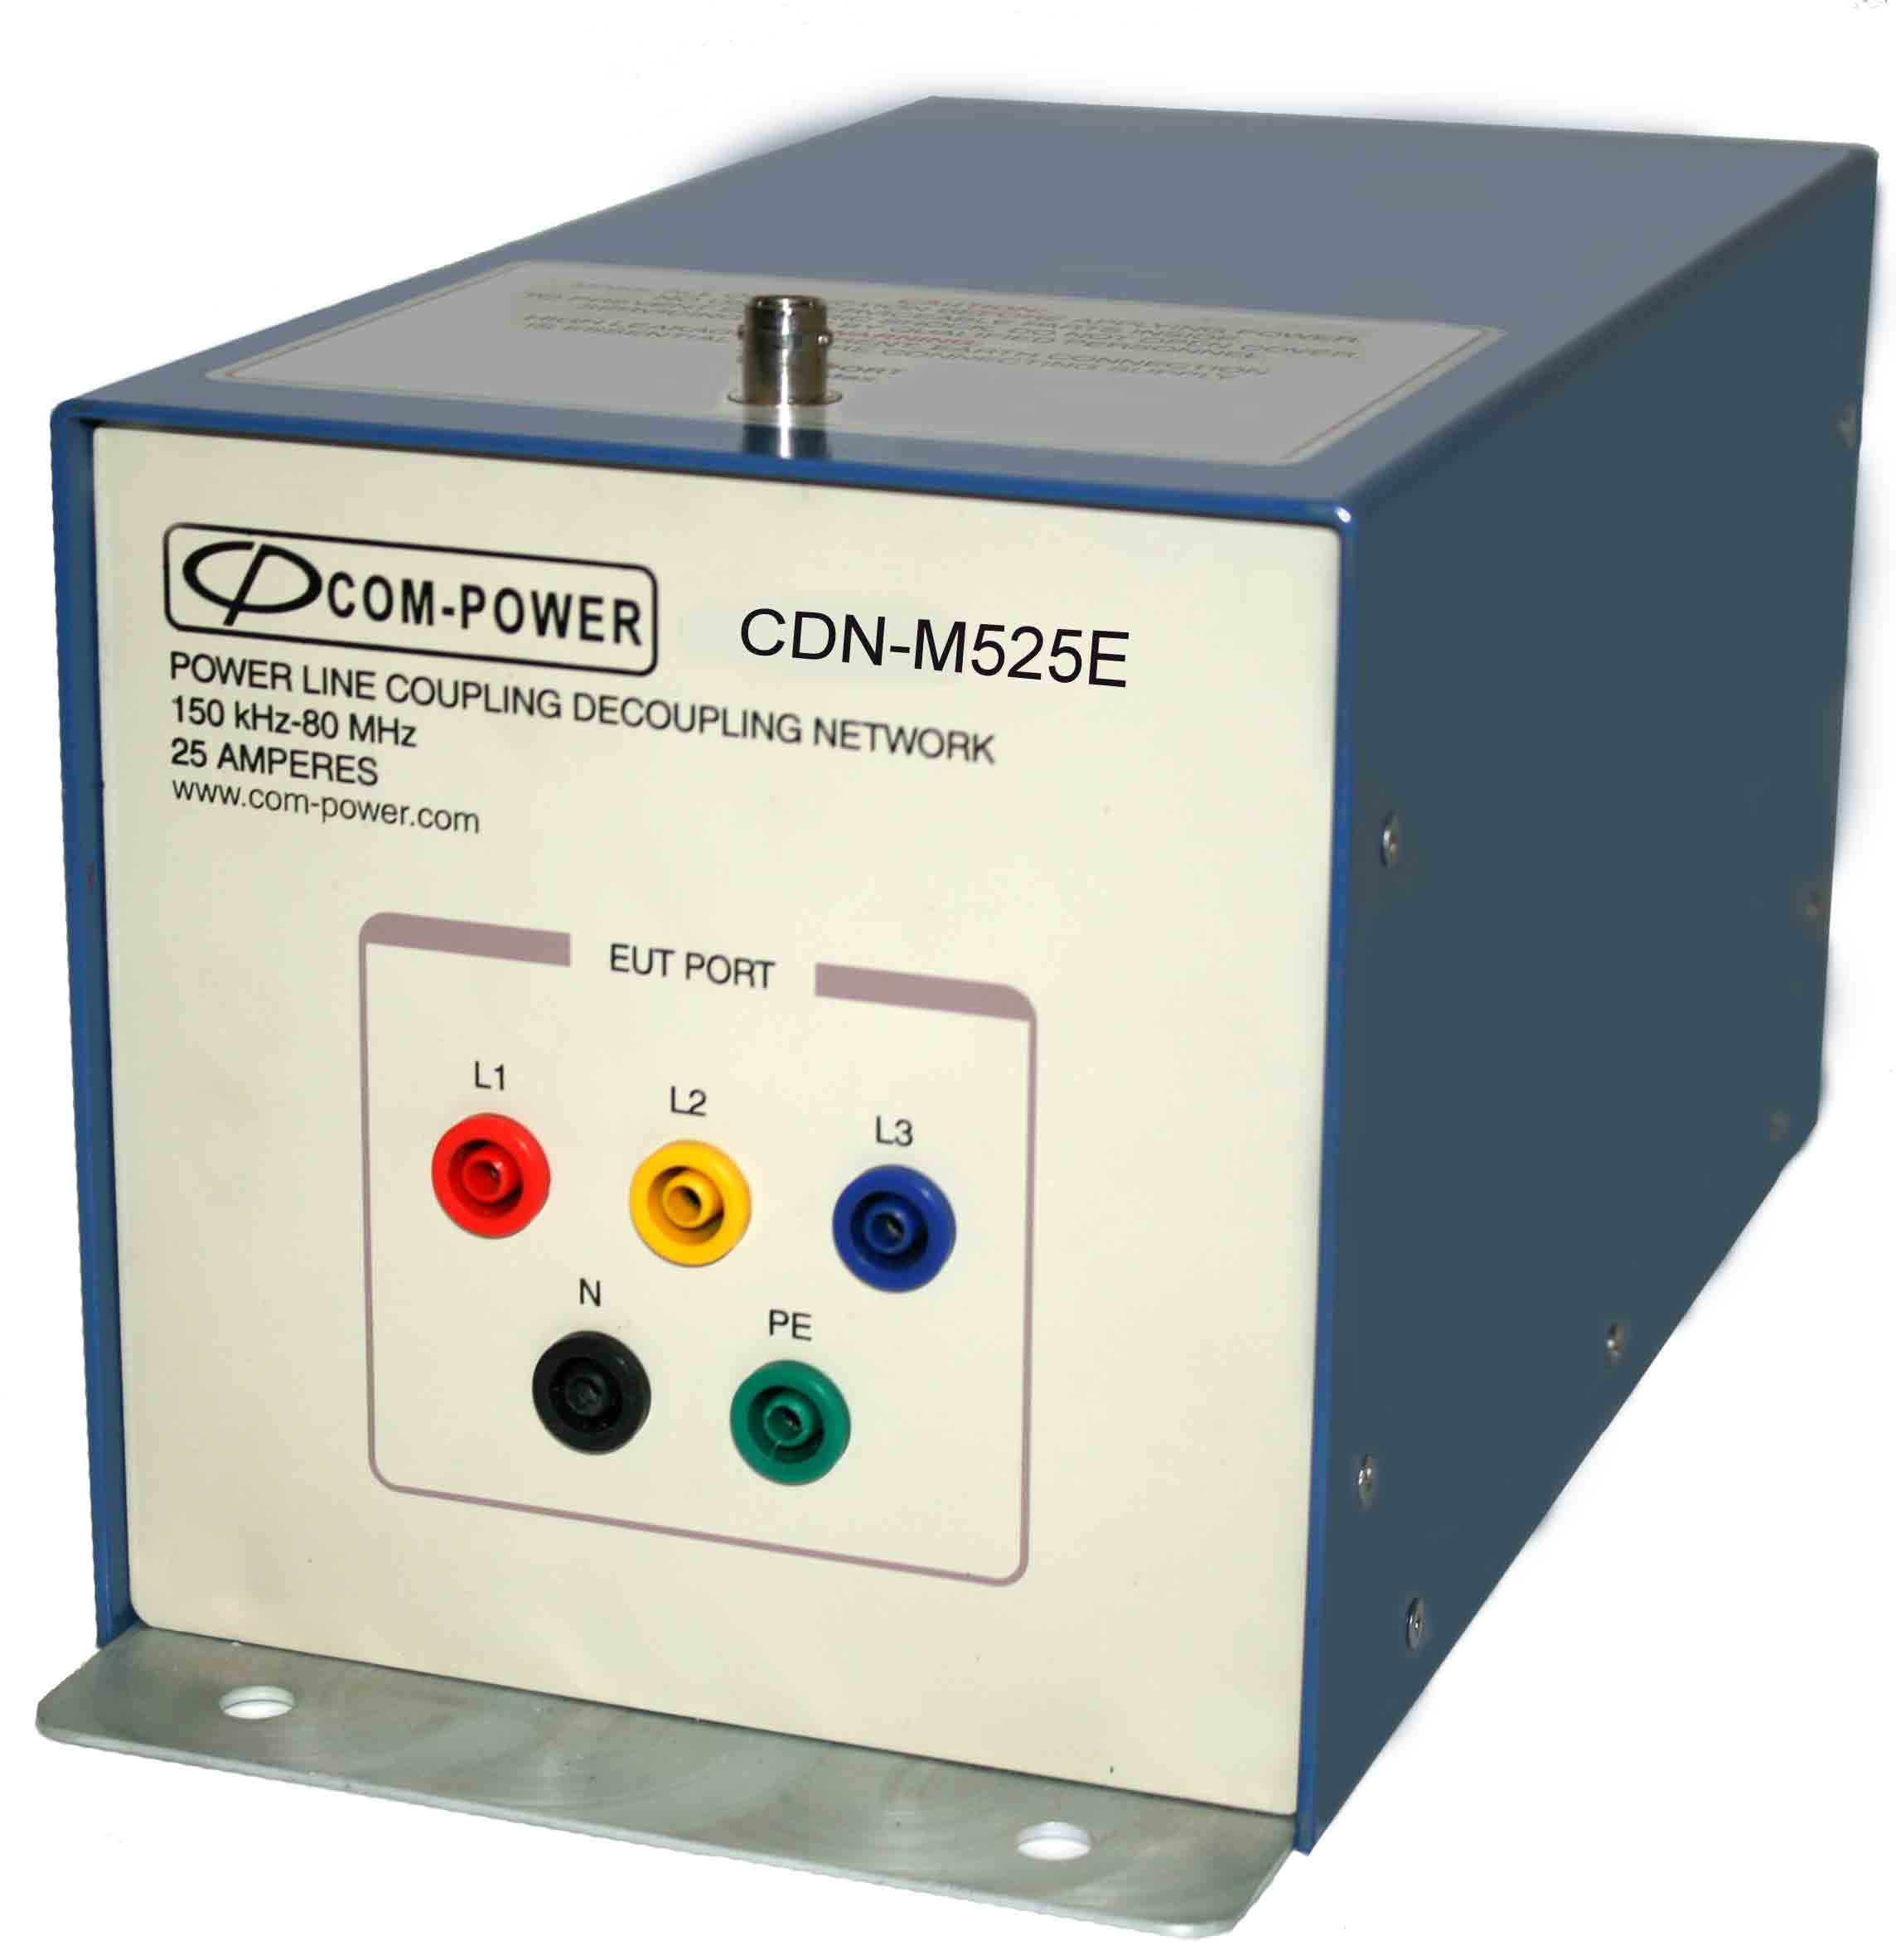 CDN-M525E - Com-Power CDN Coupling Decoupling Networks